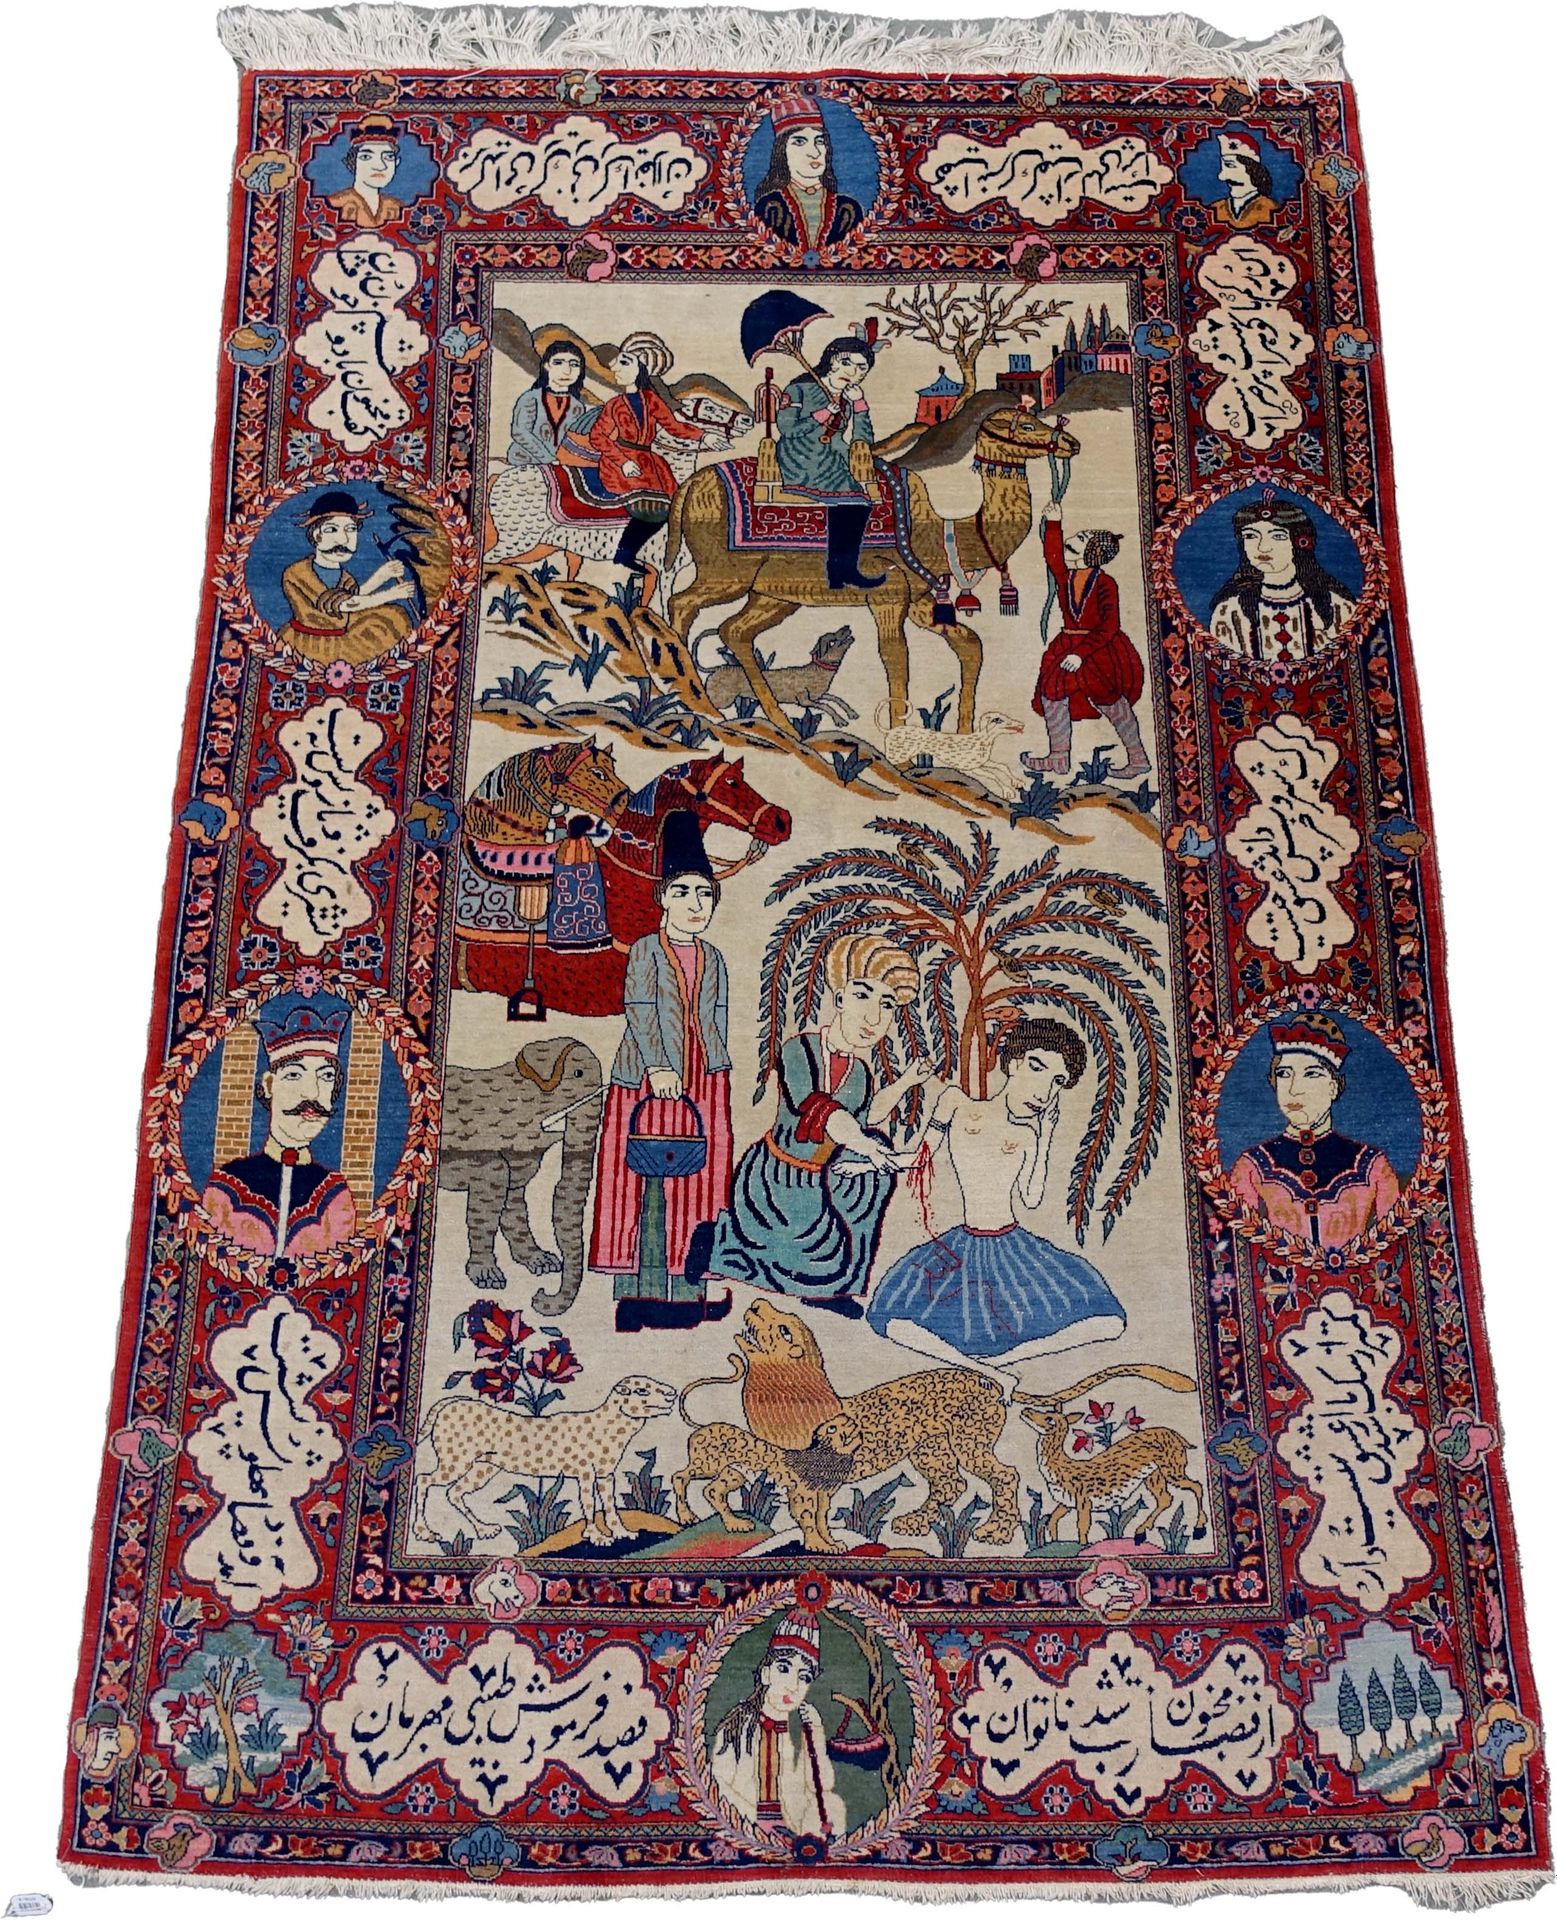 Rare Carpette figurative Kashan - “Majnoun et Leila“. Belebter Dekor mit Persone&hellip;